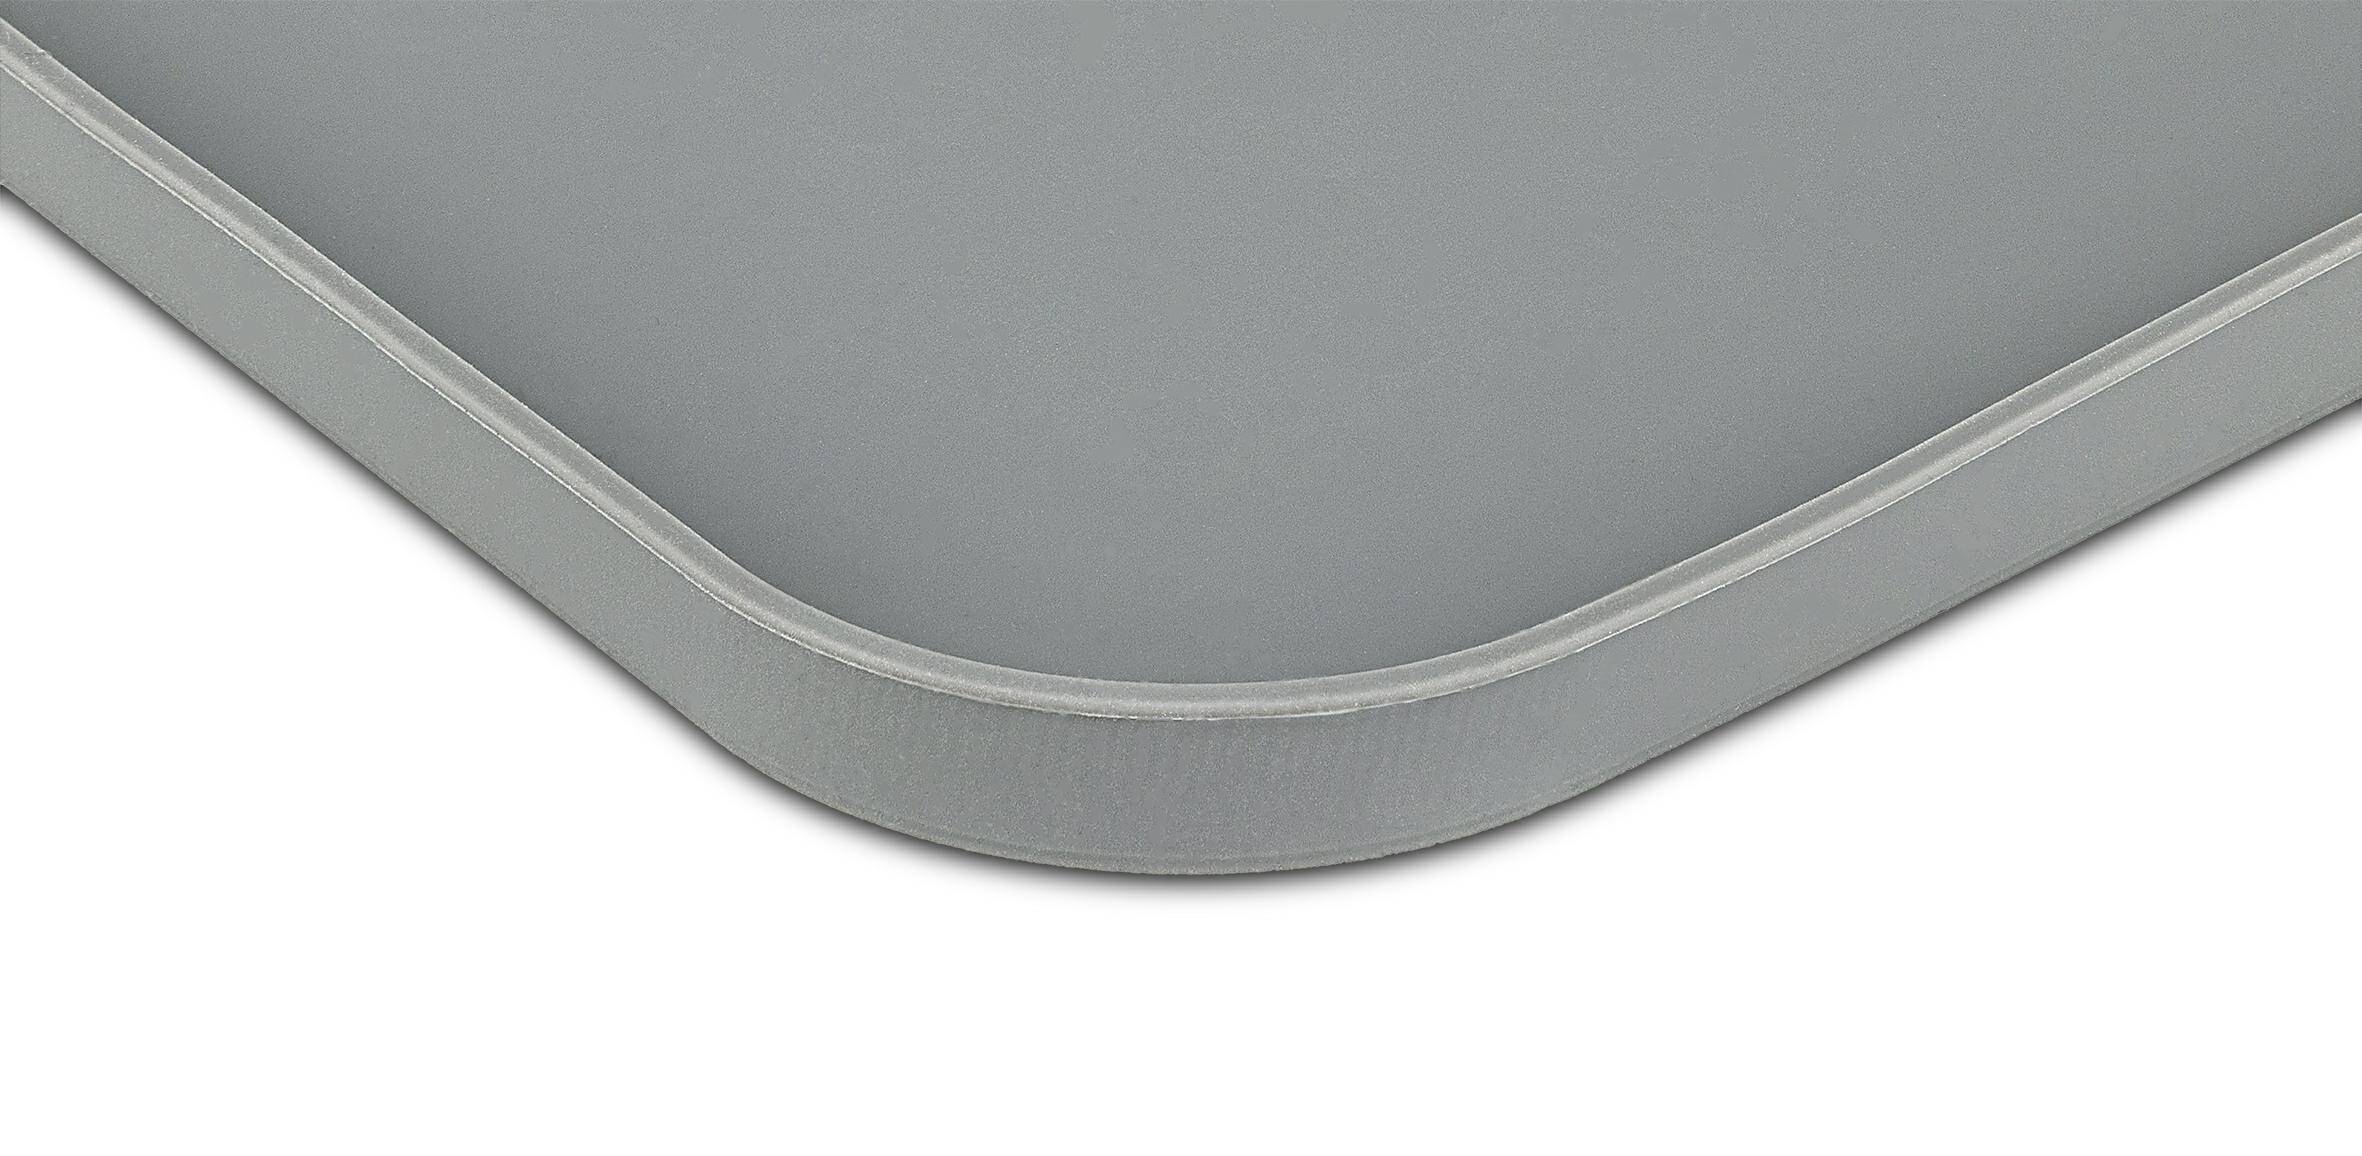 Silicone mat gray 42x30cm M (Photo 4)